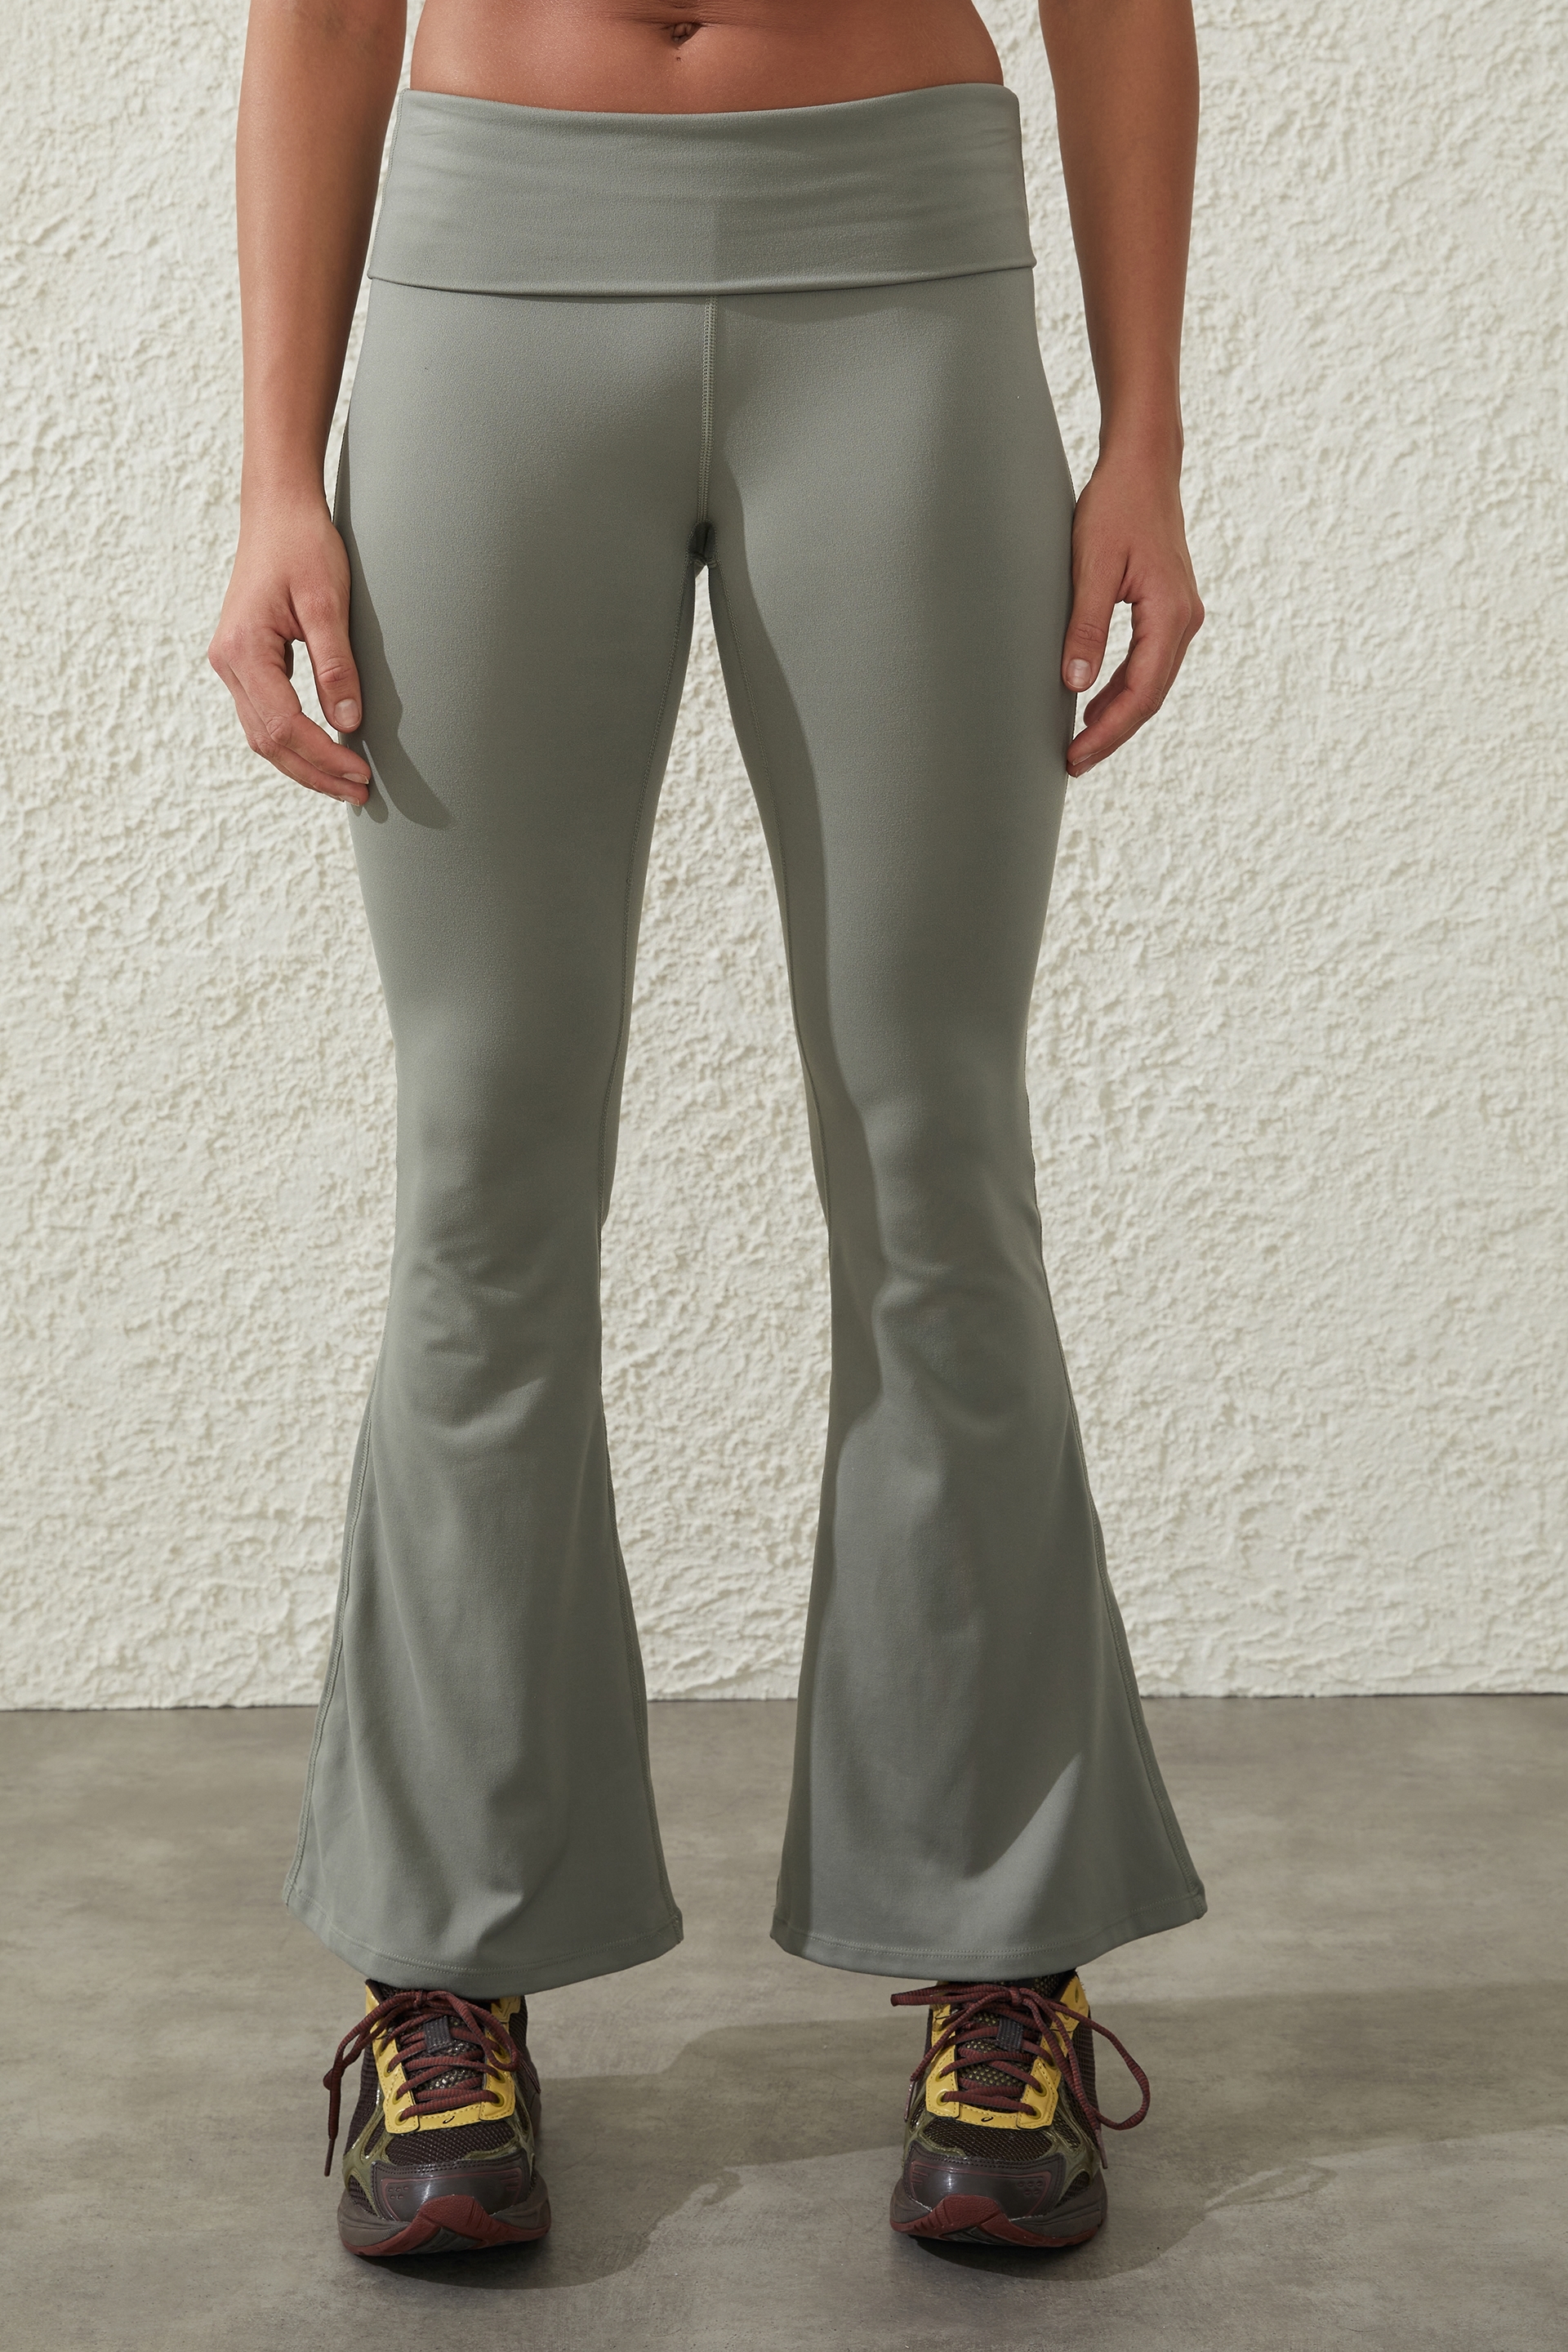 Cotton On Leggings Side Zip Rib Pants Green - Size Medium